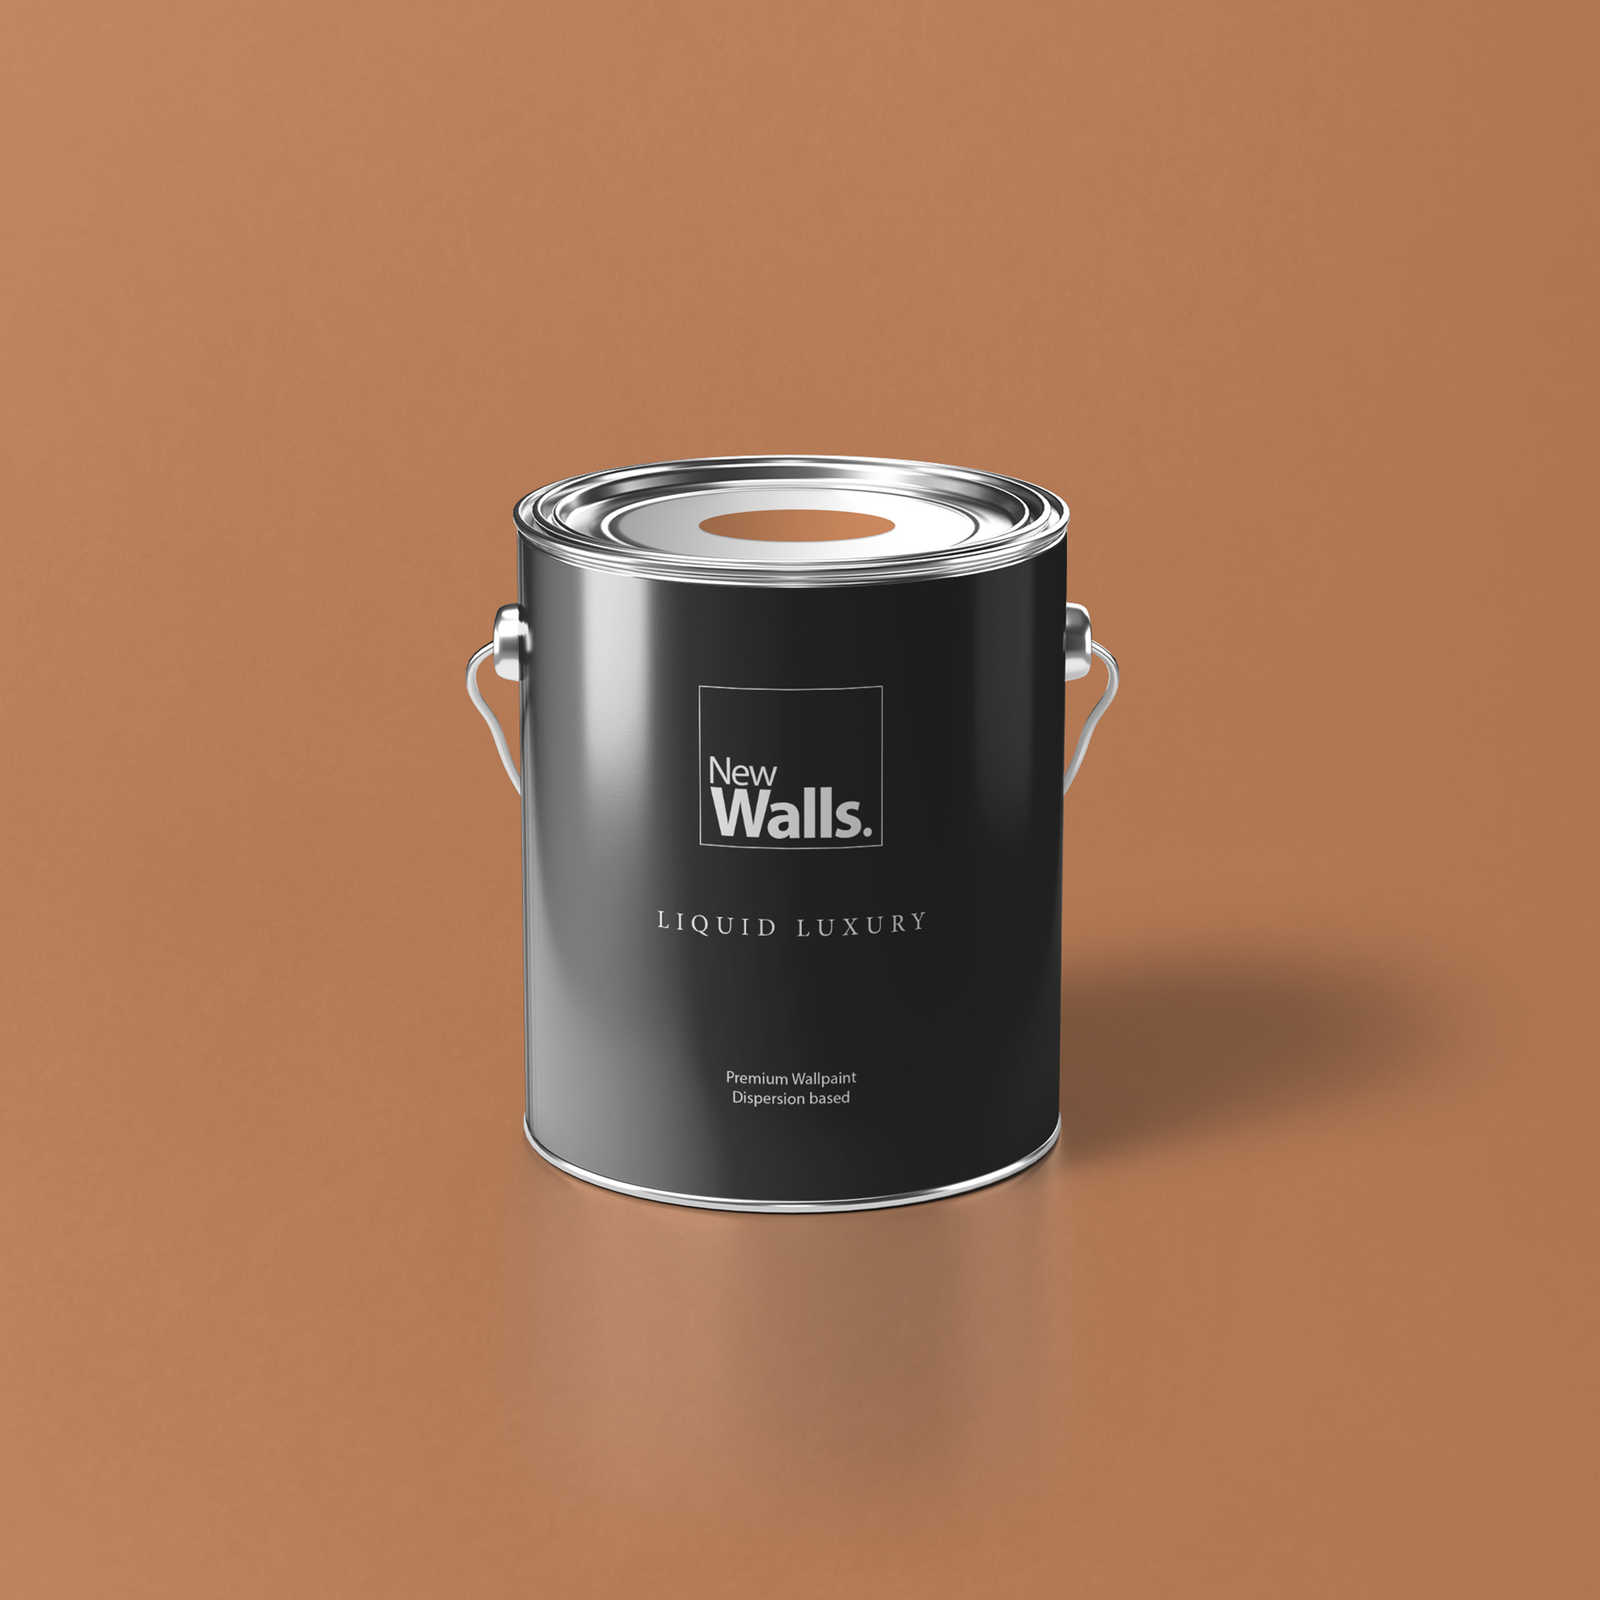 Premium Wall Paint serene copper »Pretty Peach« NW904 – 2.5 litre
